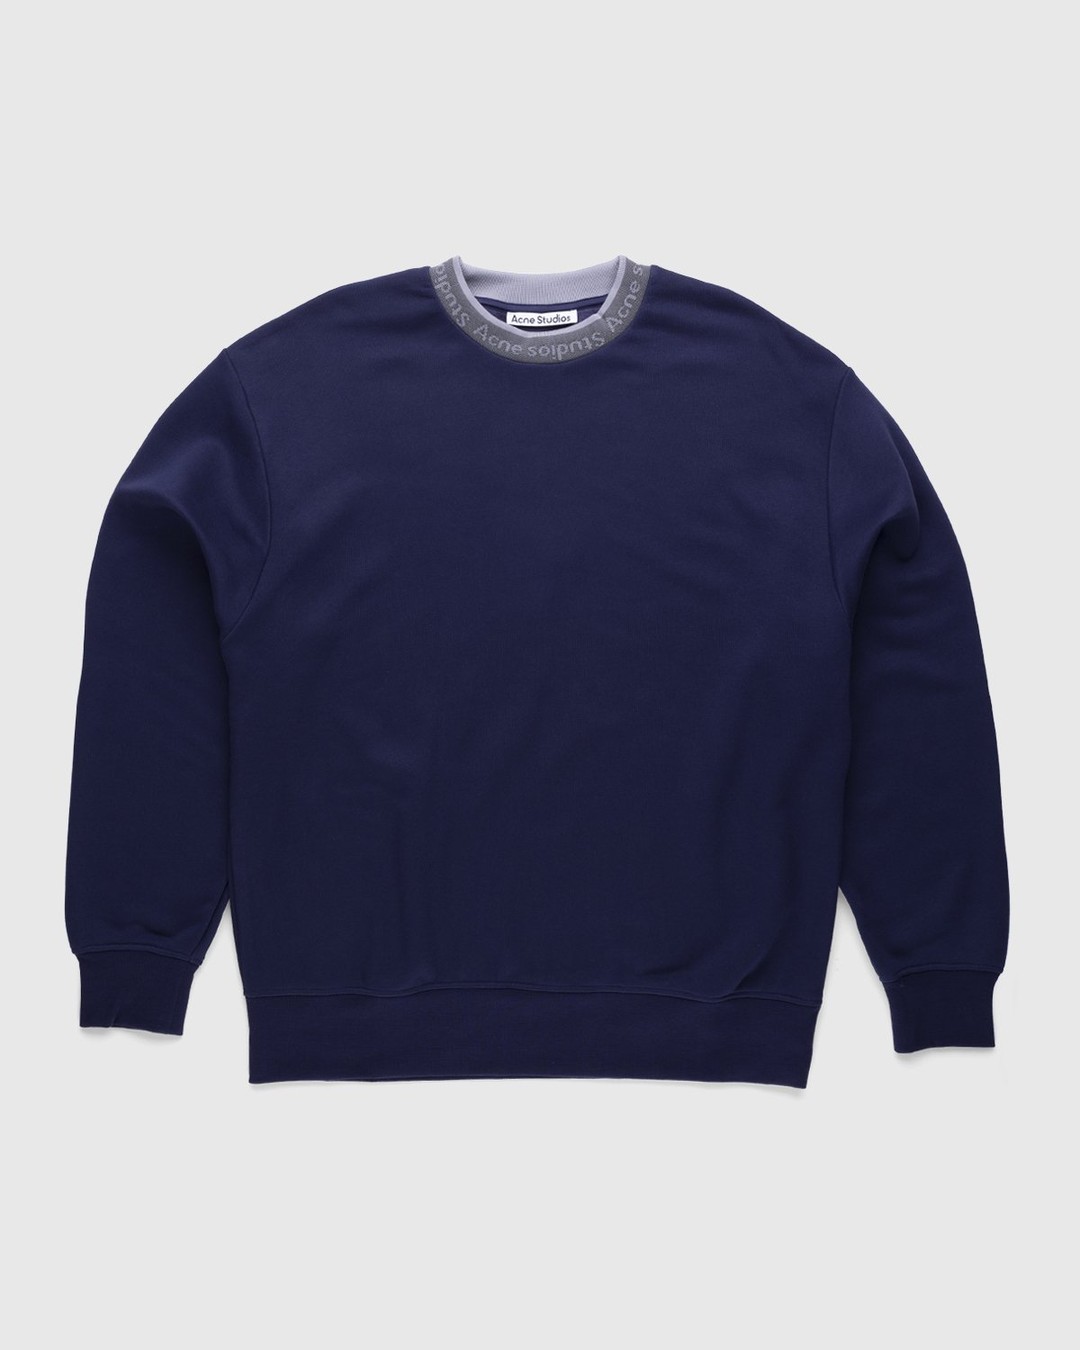 Acne Studios – Logo Rib Sweatshirt Indigo Blue - Sweatshirts - Blue - Image 1